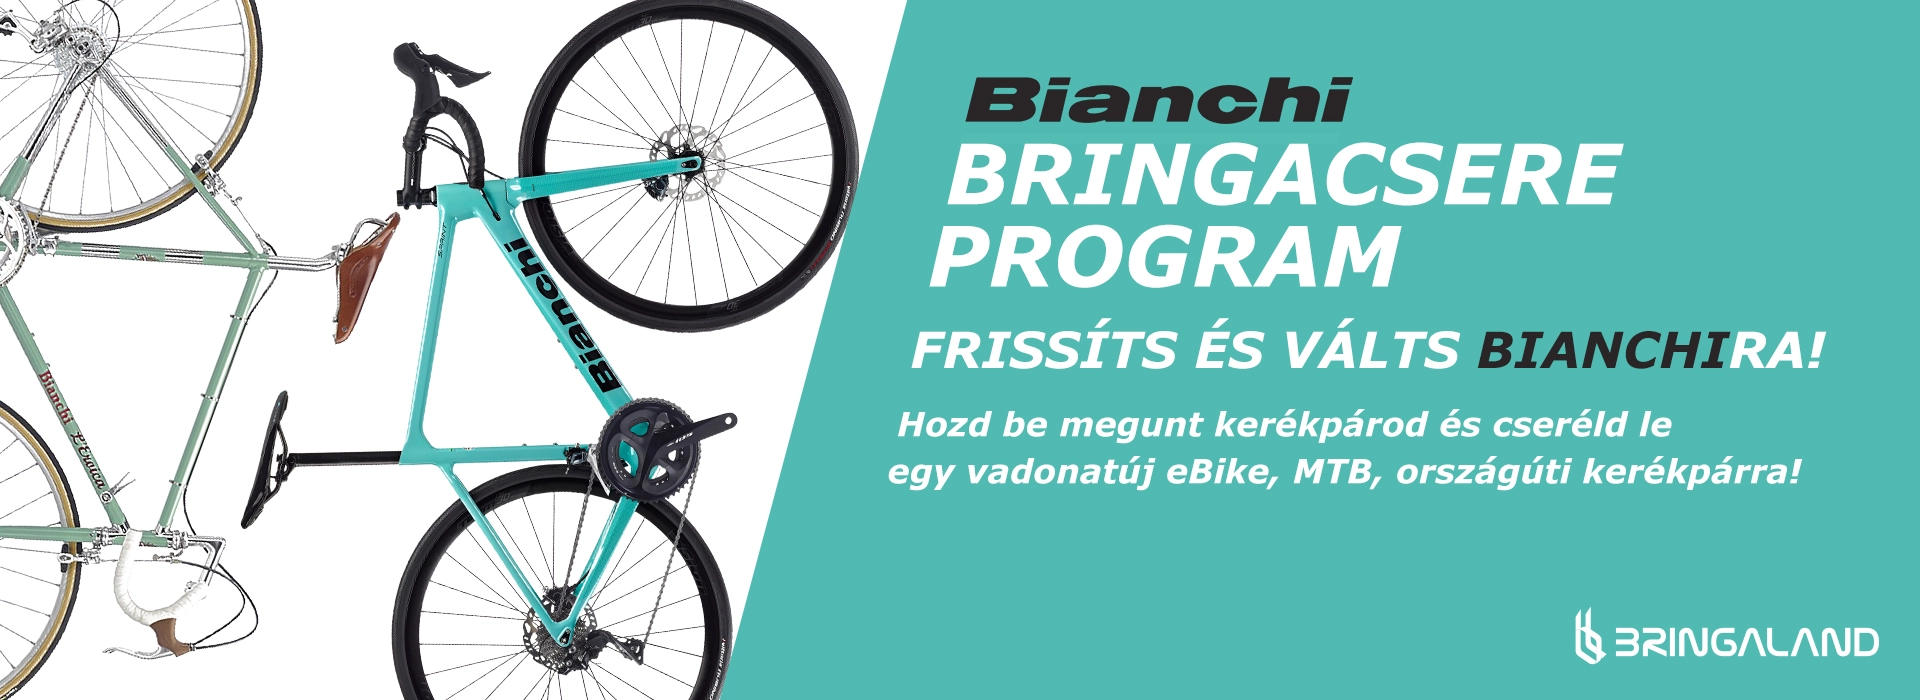 Bianchi Bringacsere Program